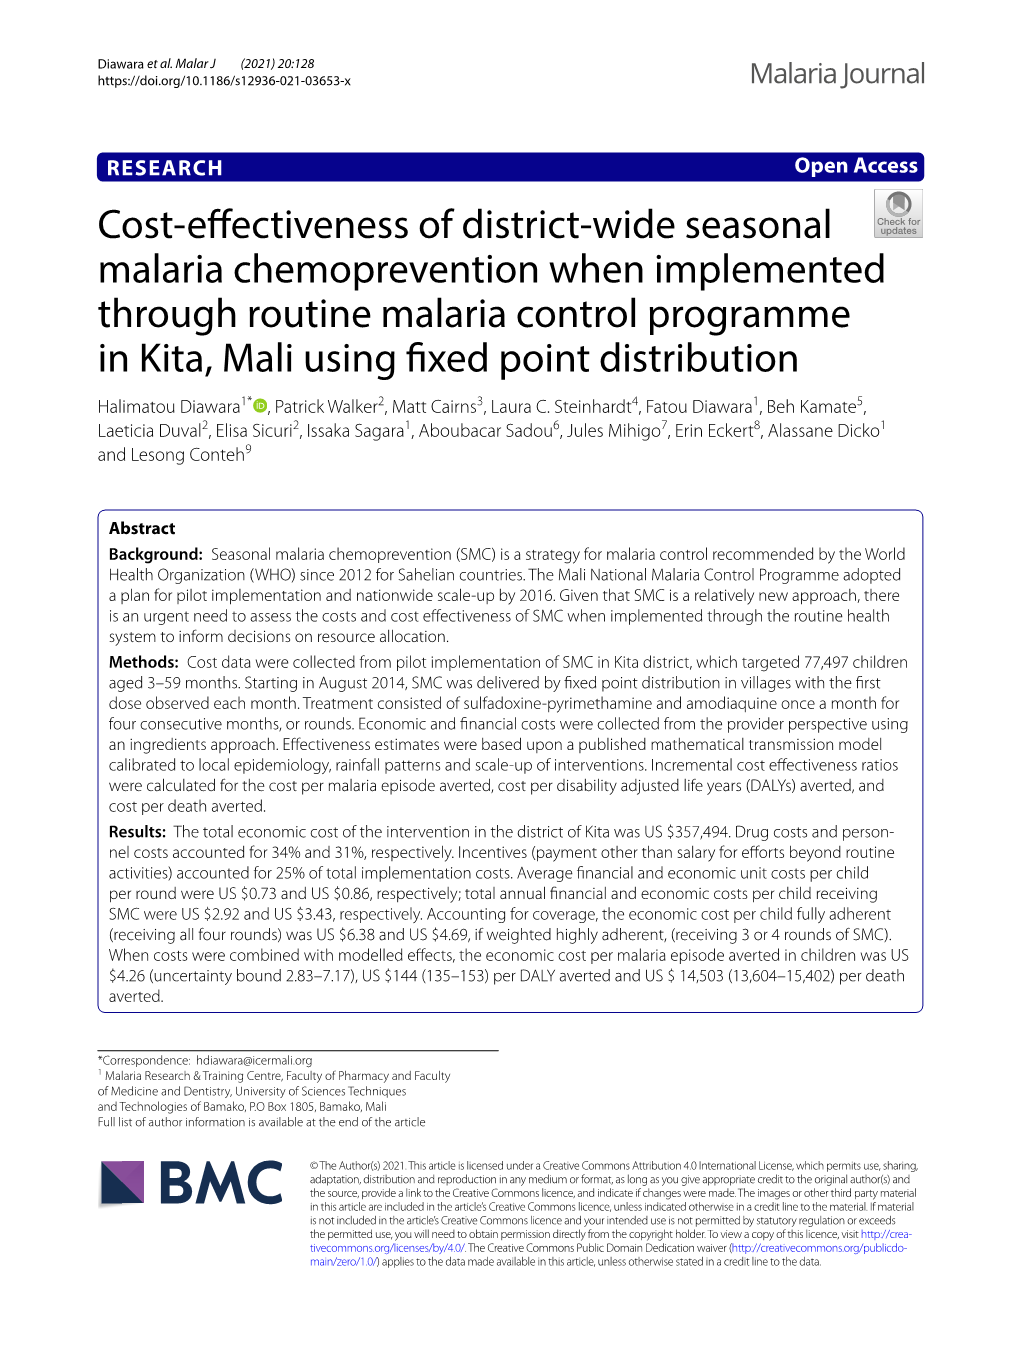 Cost-Effectiveness of District-Wide Seasonal